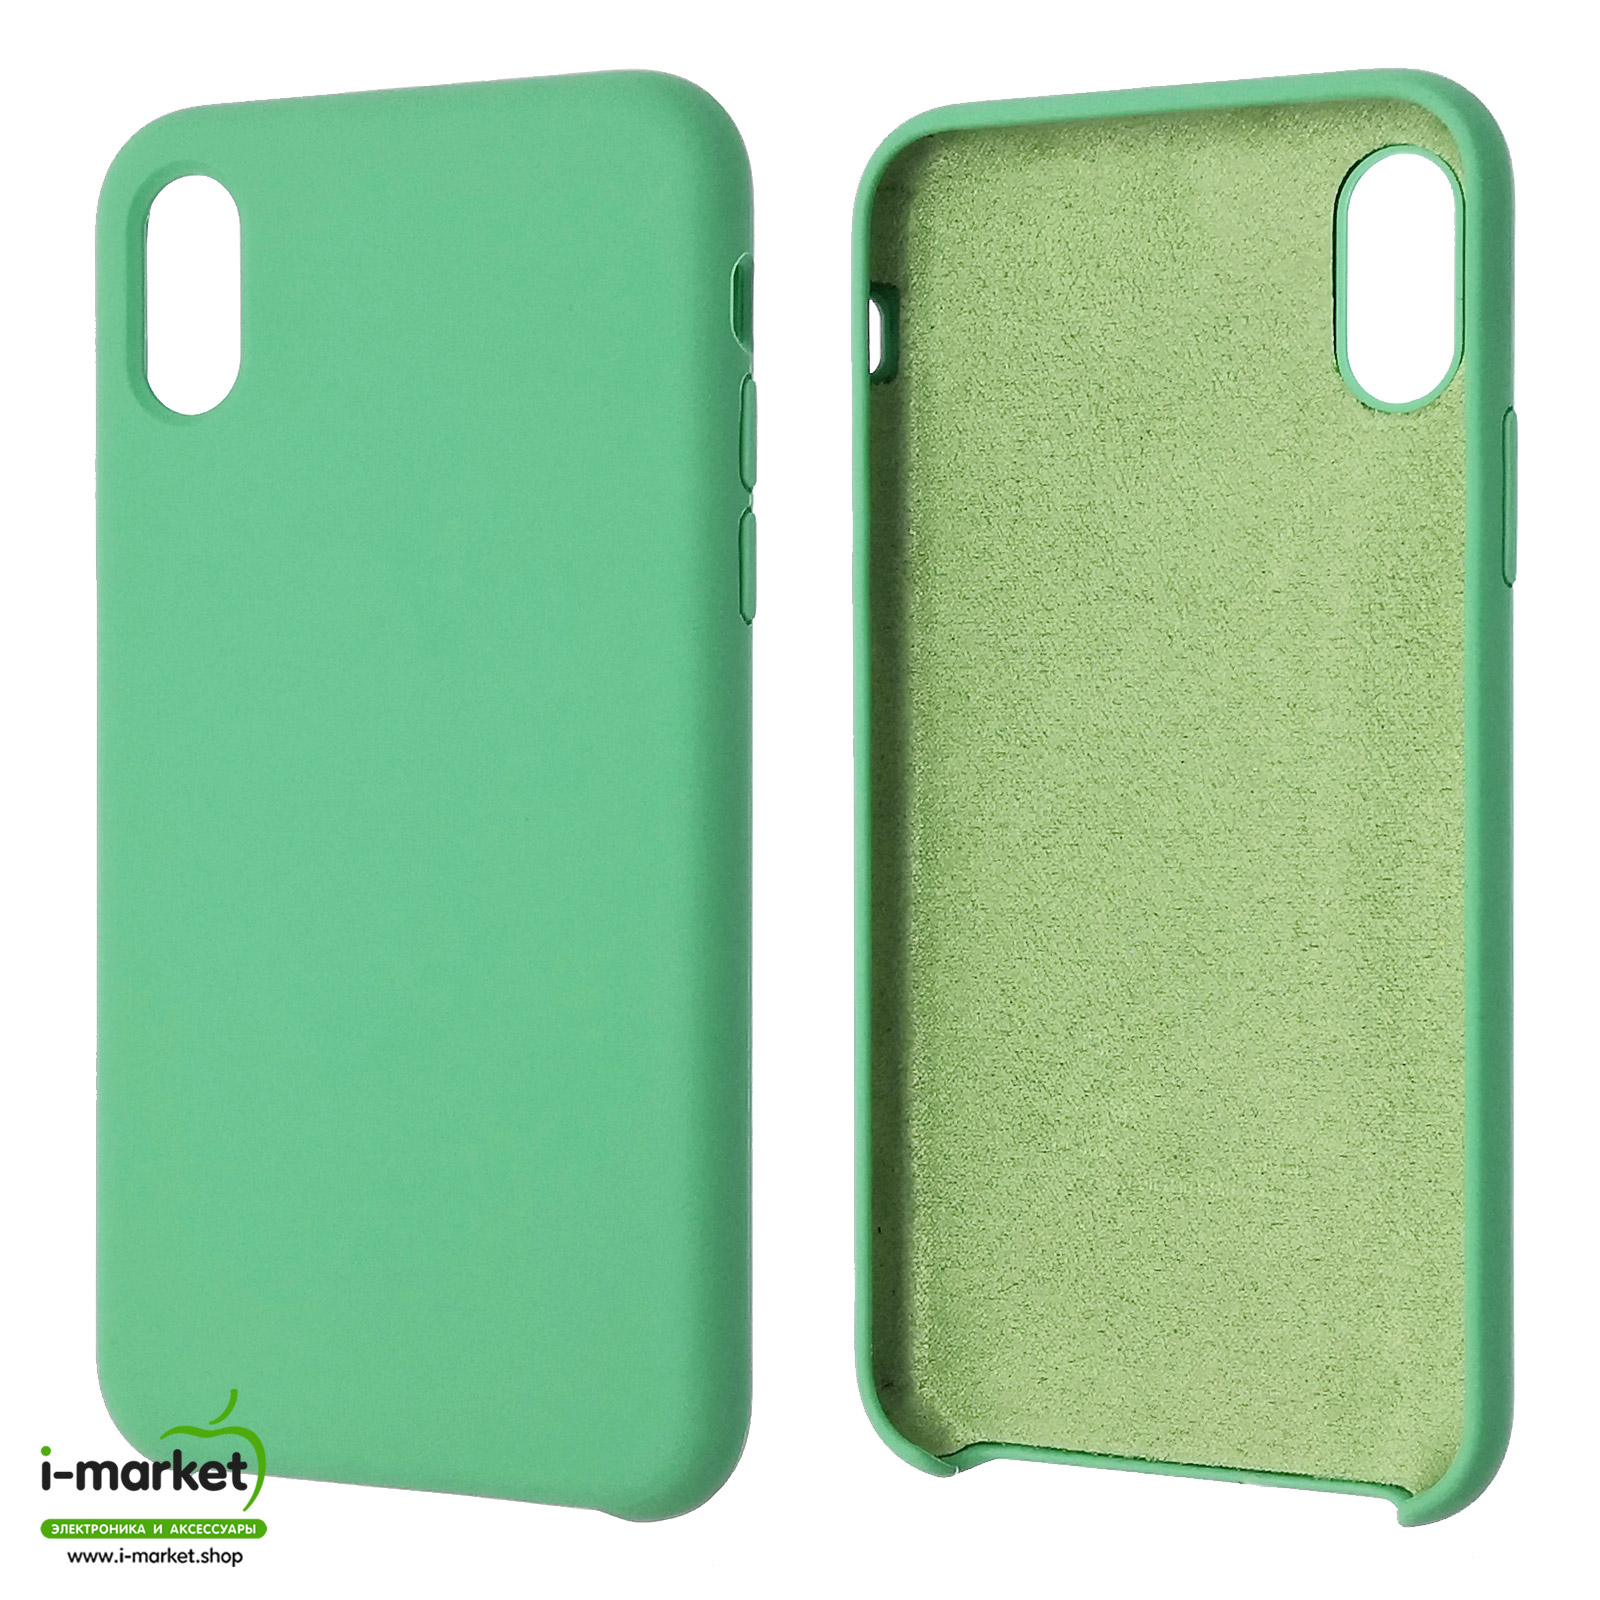 Чехол накладка Silicon Case для APPLE iPhone X, iPhone XS, силикон, бархат, цвет мятный